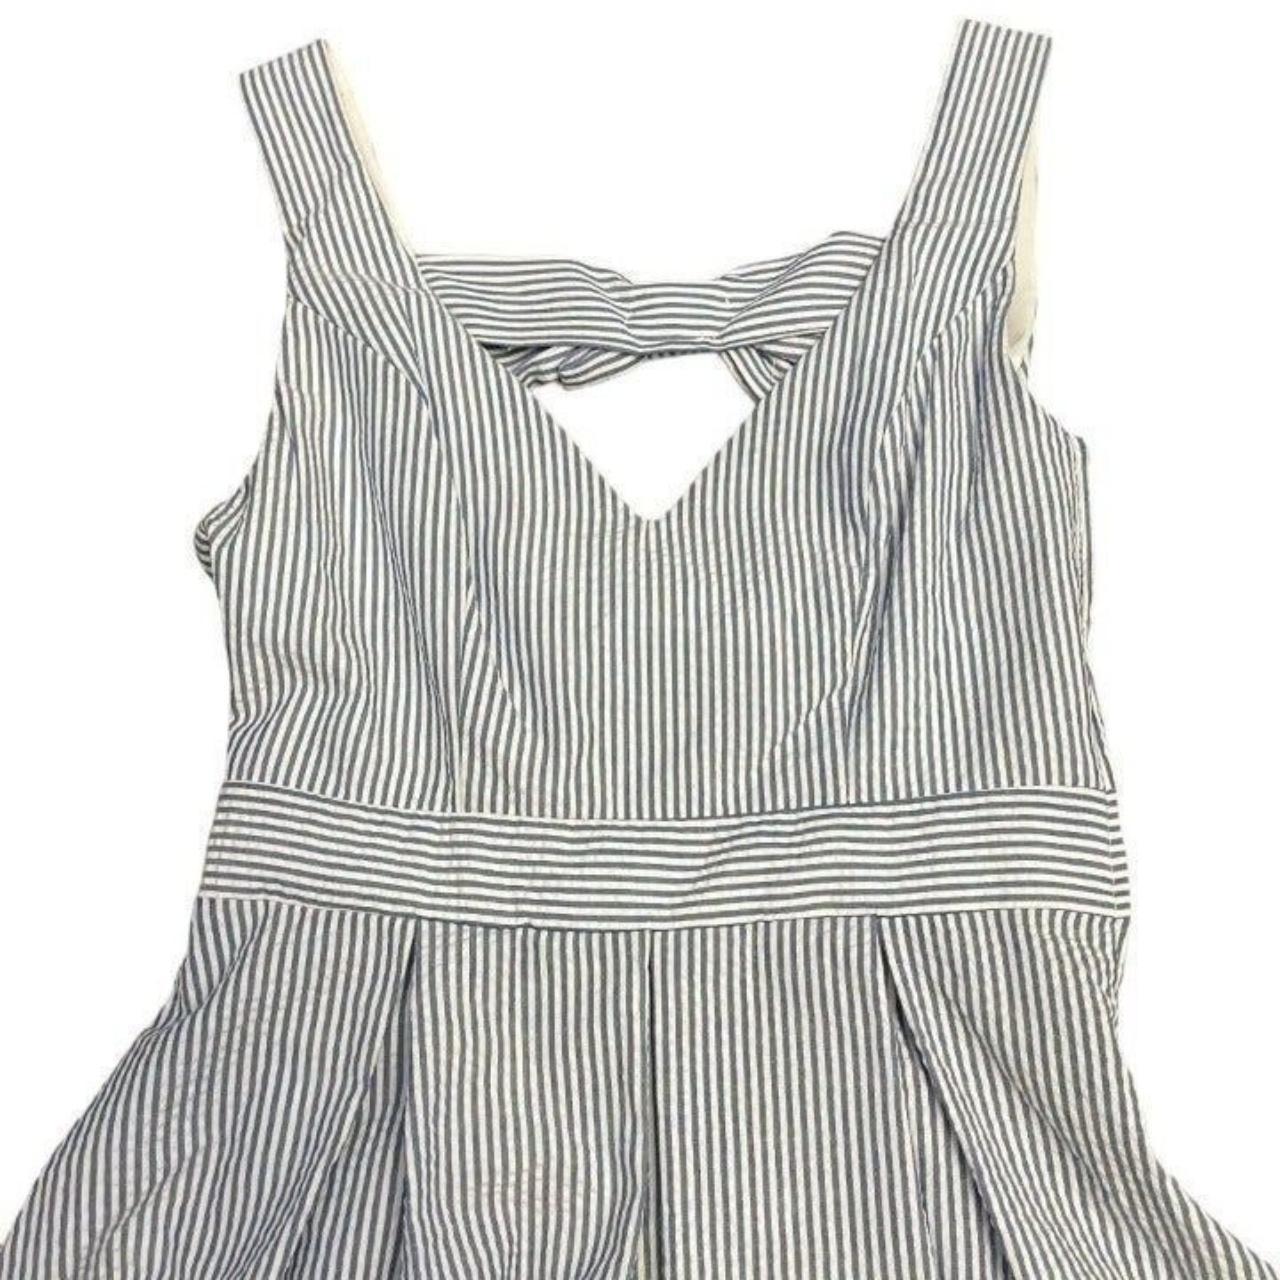 Product Image 4 - B. Darlin 5/6 Stripes Dress

New
Size